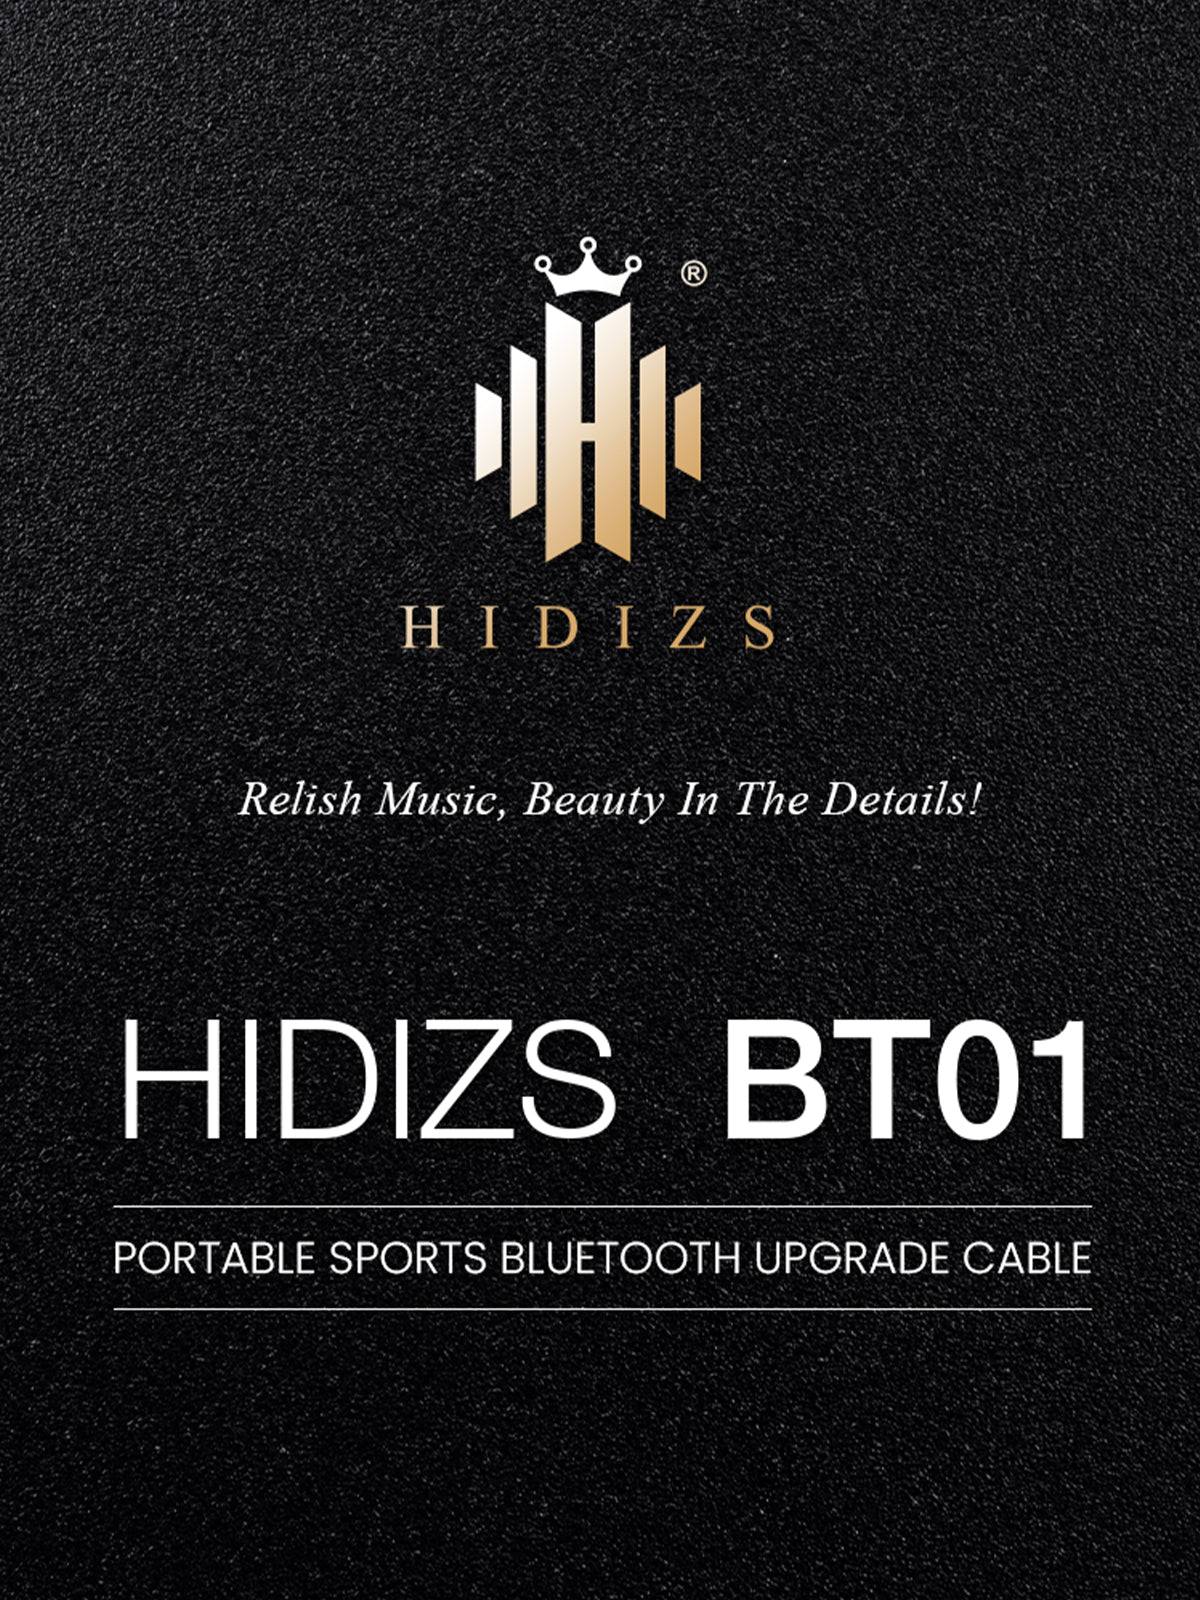 HIDIZS-BT01-M-23032702